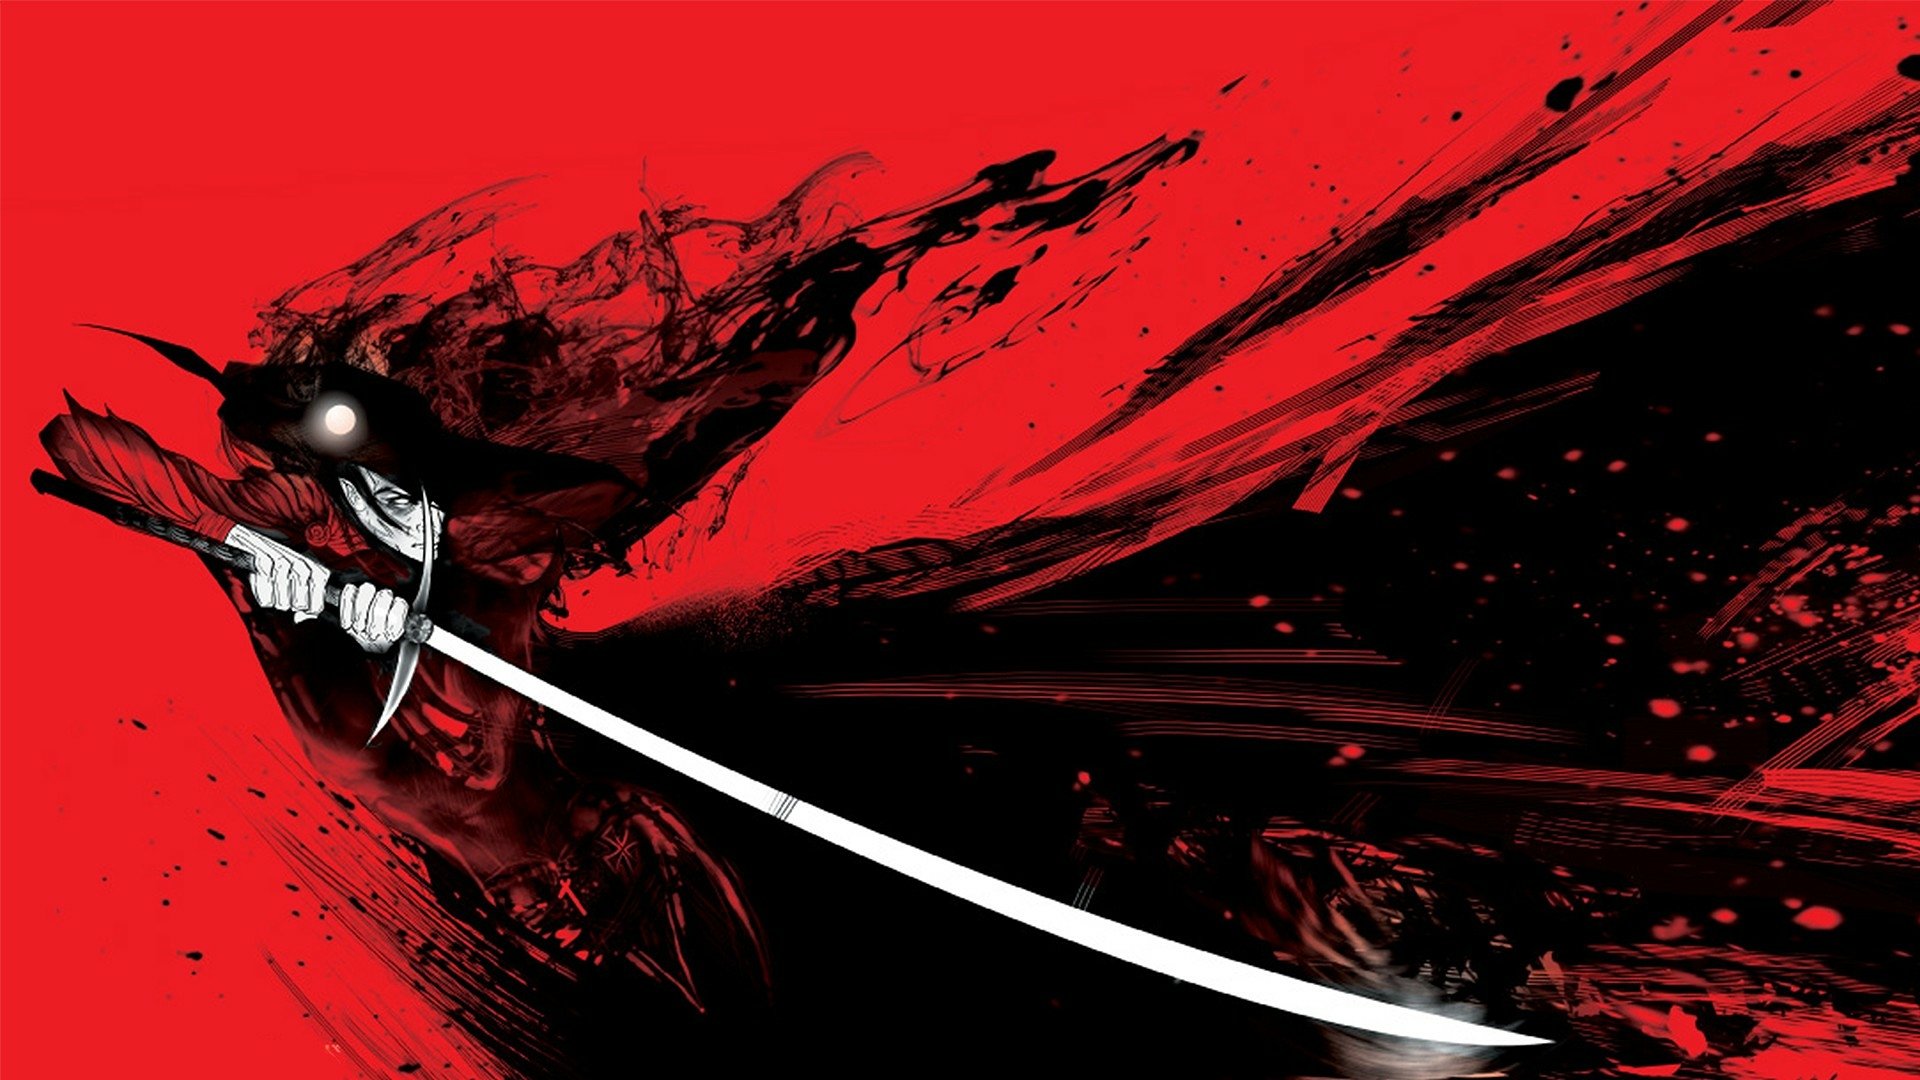 Anime Vampire Hunter D HD Wallpaper